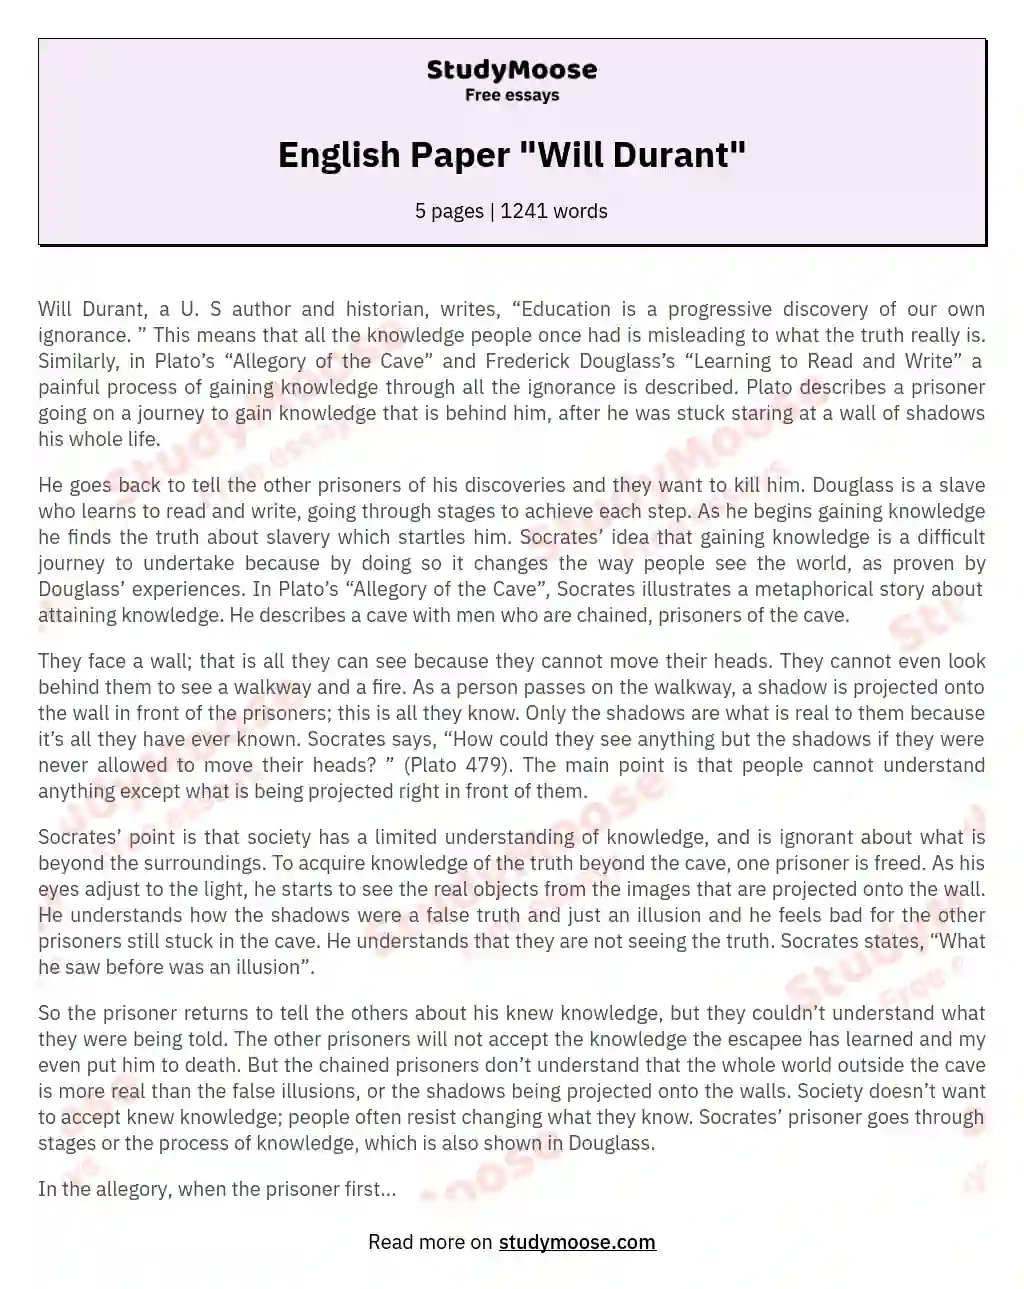 English Paper "Will Durant" essay